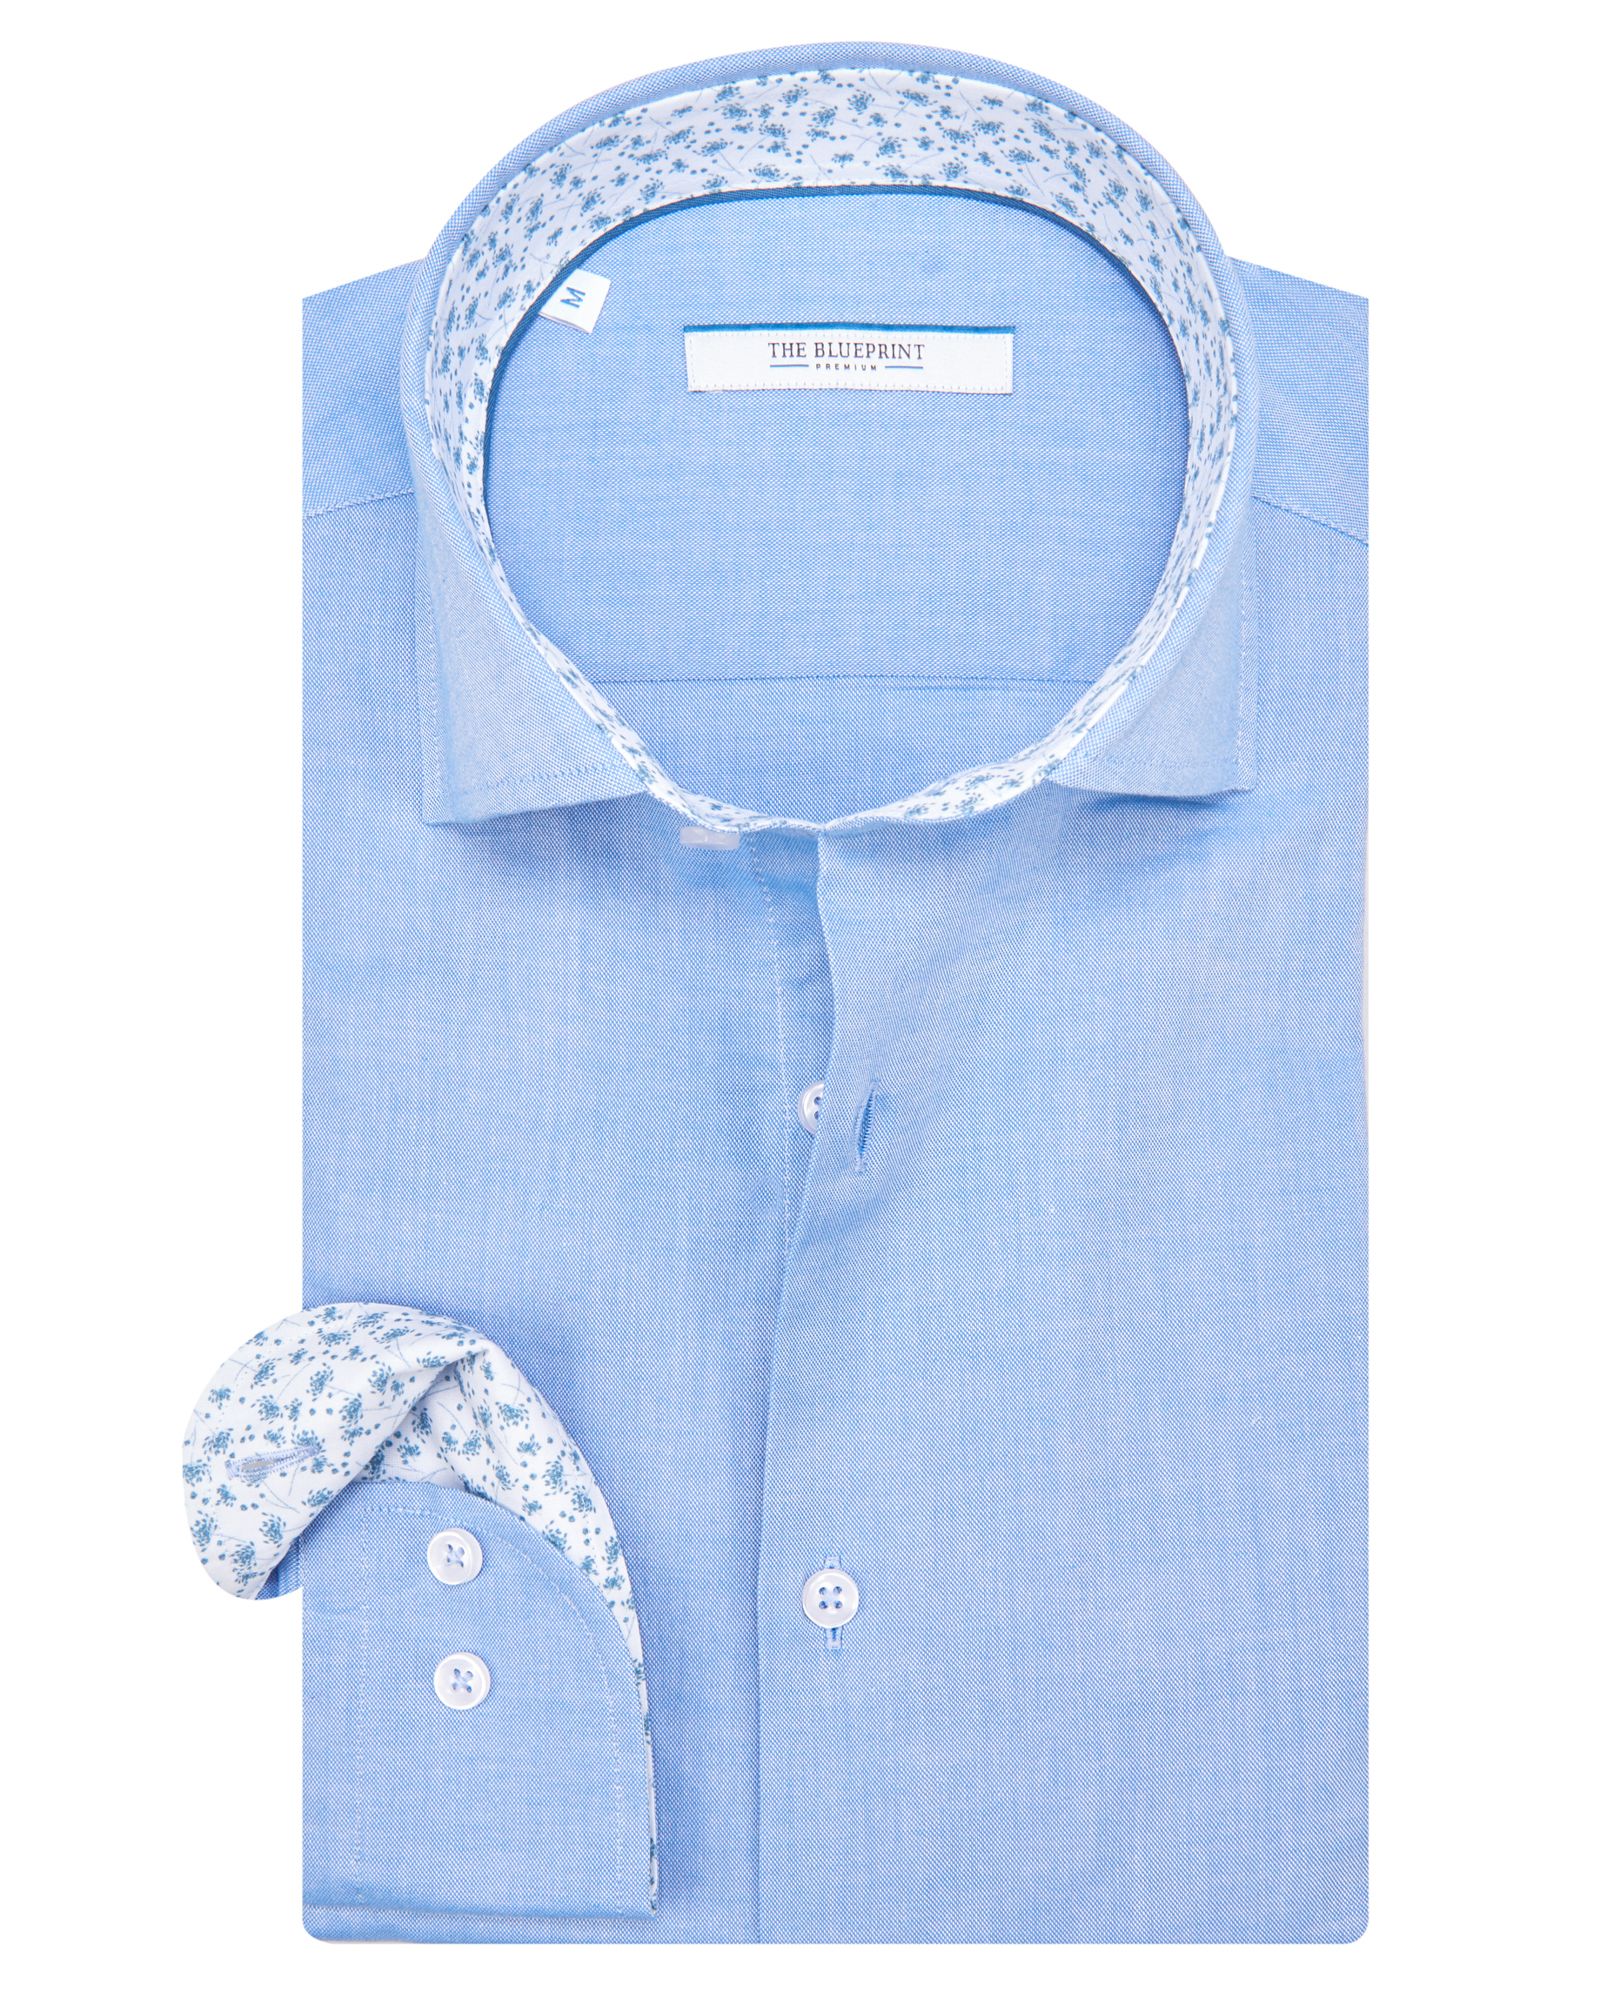 The BLUEPRINT Premium Casual Overhemd LM Blauw uni 082221-001-L